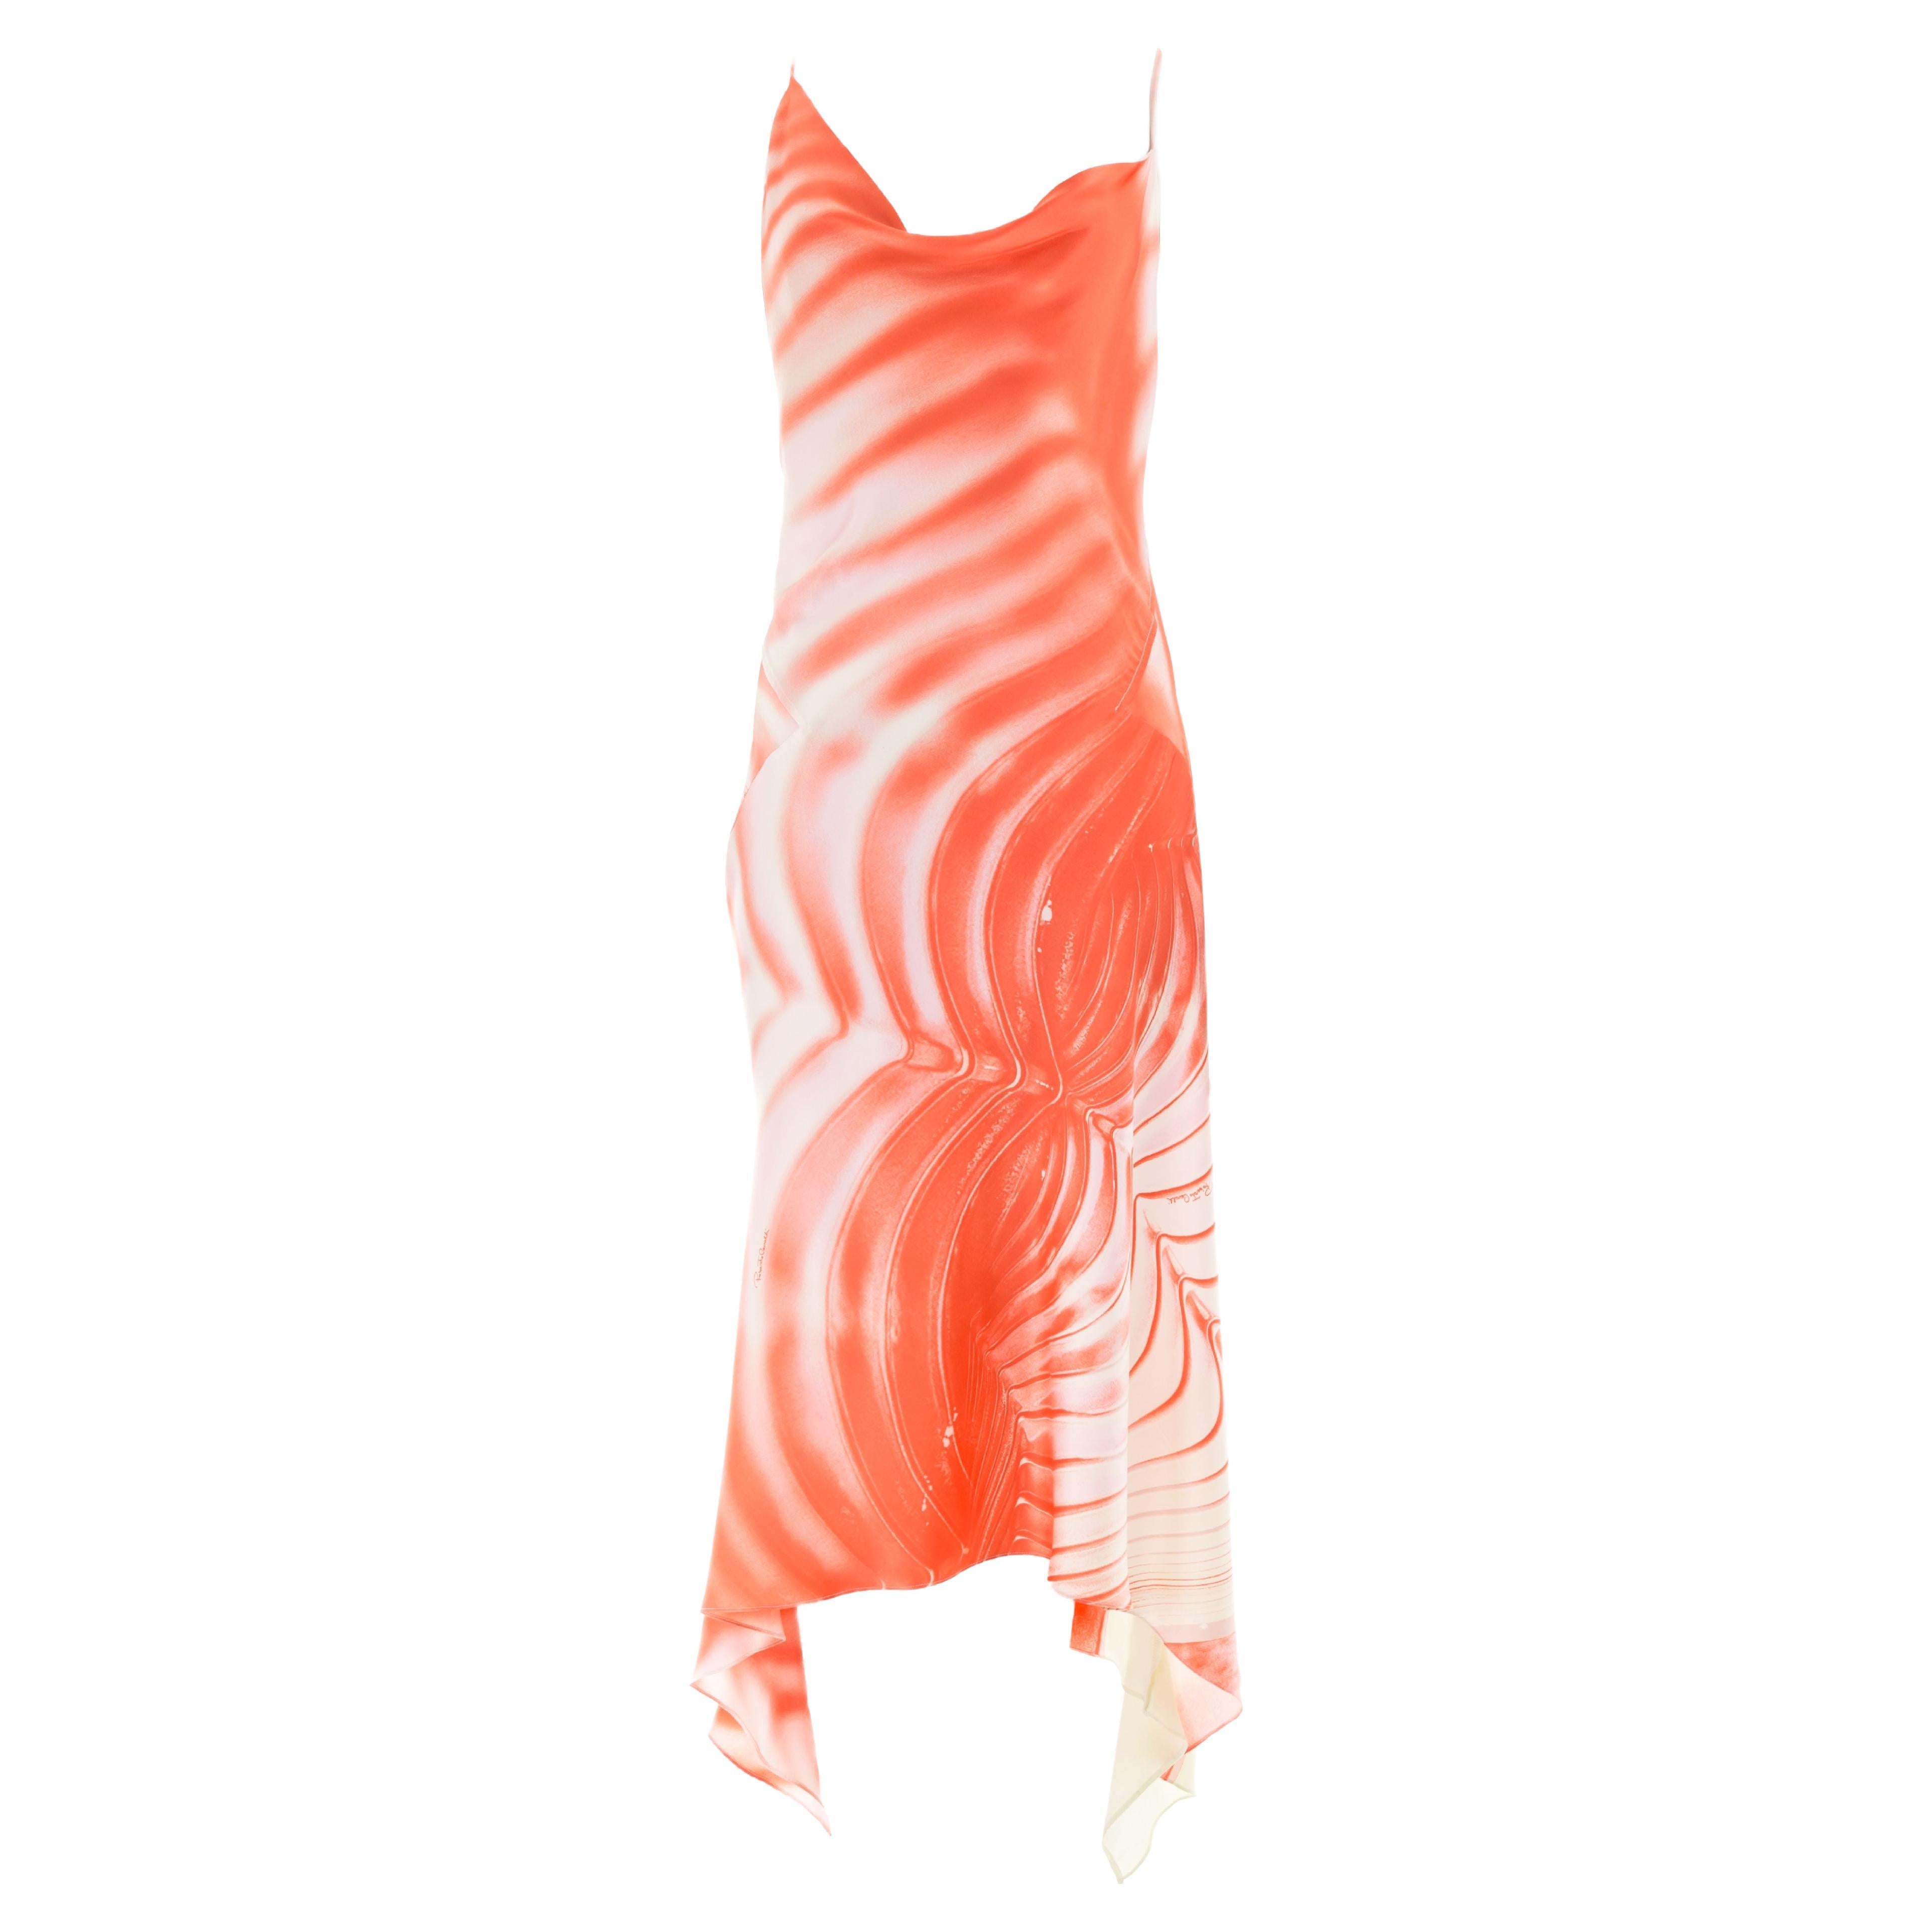 Roberto Cavalli S/S 2001 coral open-back graphic silk dress For Sale